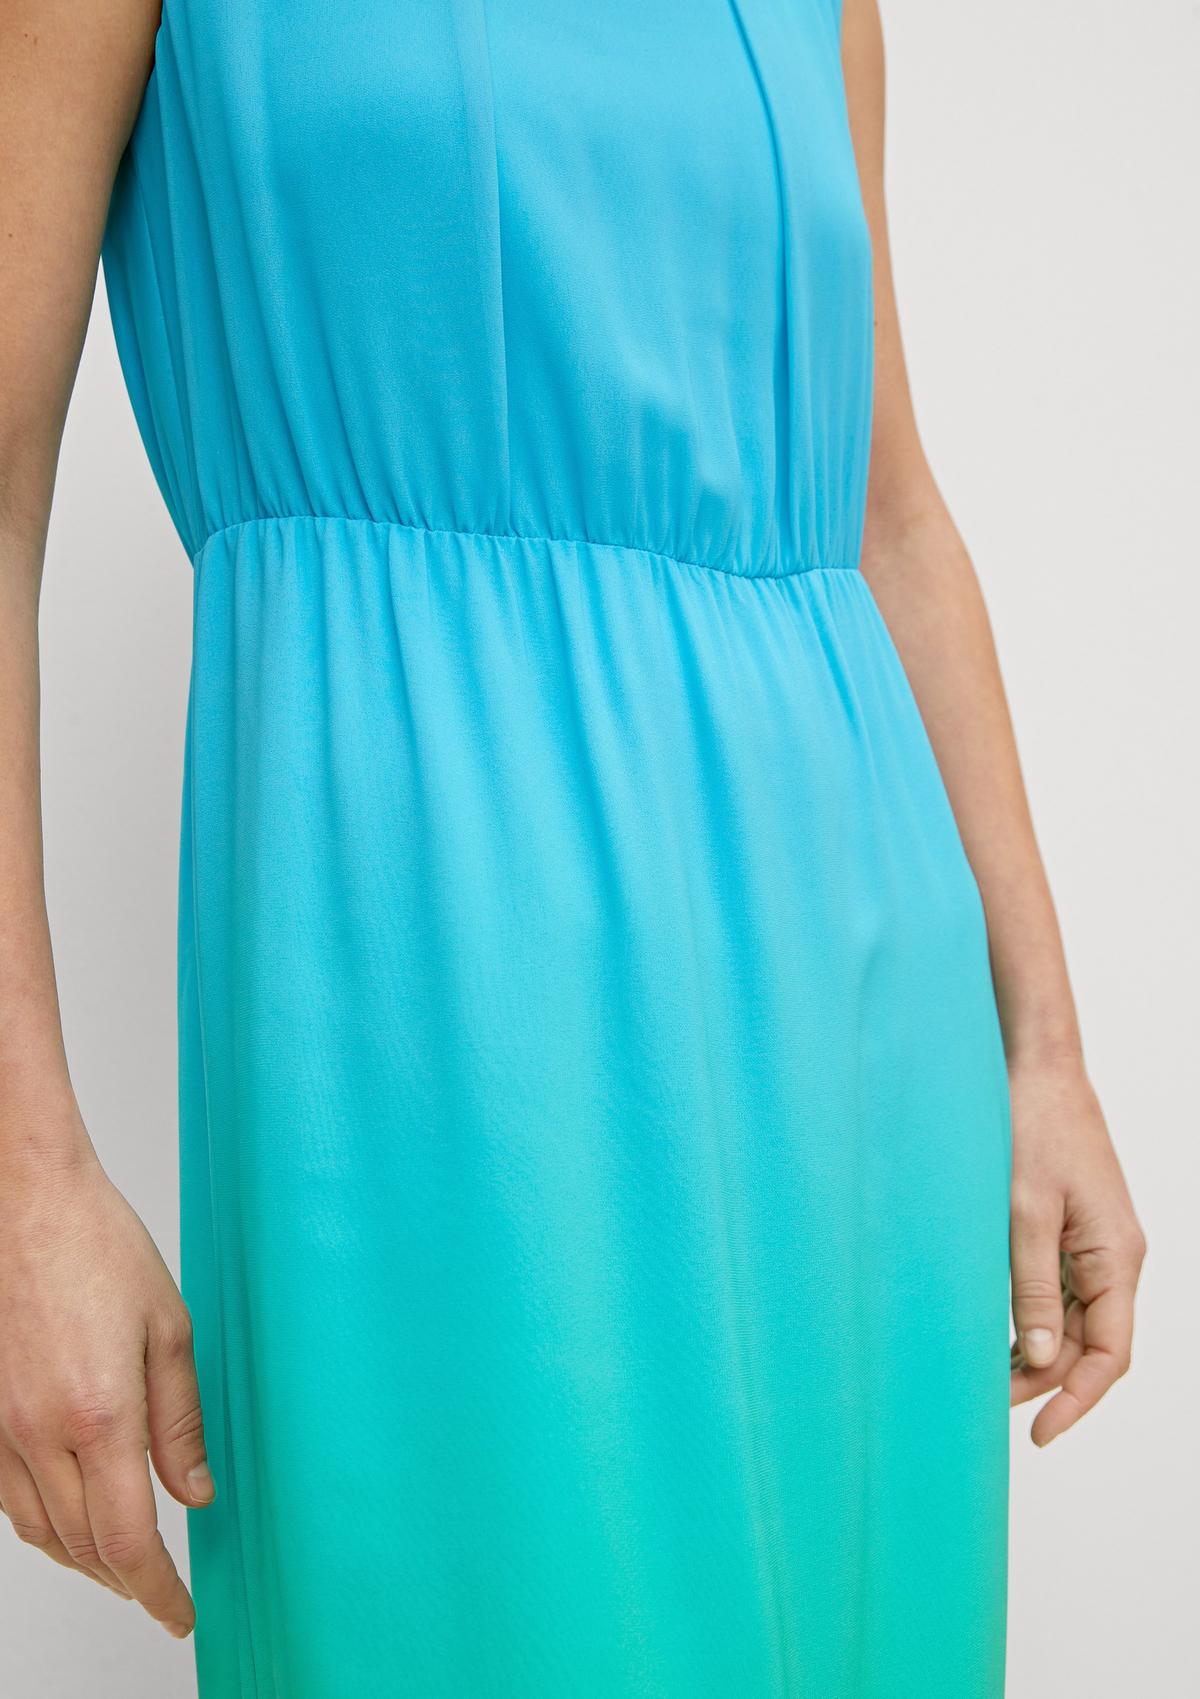 Chiffon-Kleid mit Farbverlauf - türkisblau | Comma